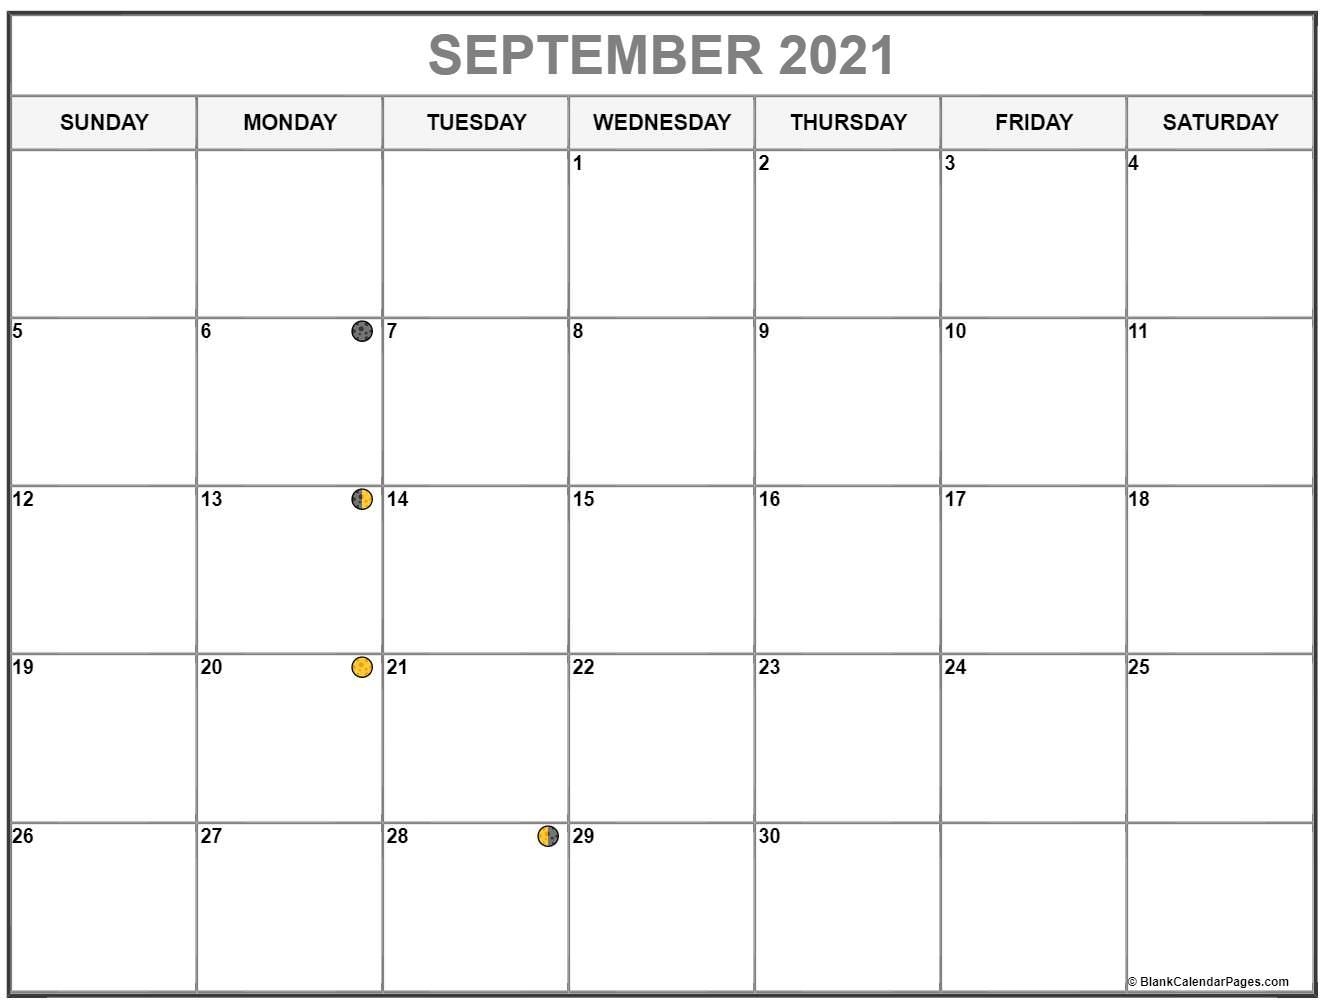 Lunasr Calendar Sept 2021 | Lunar Calendar